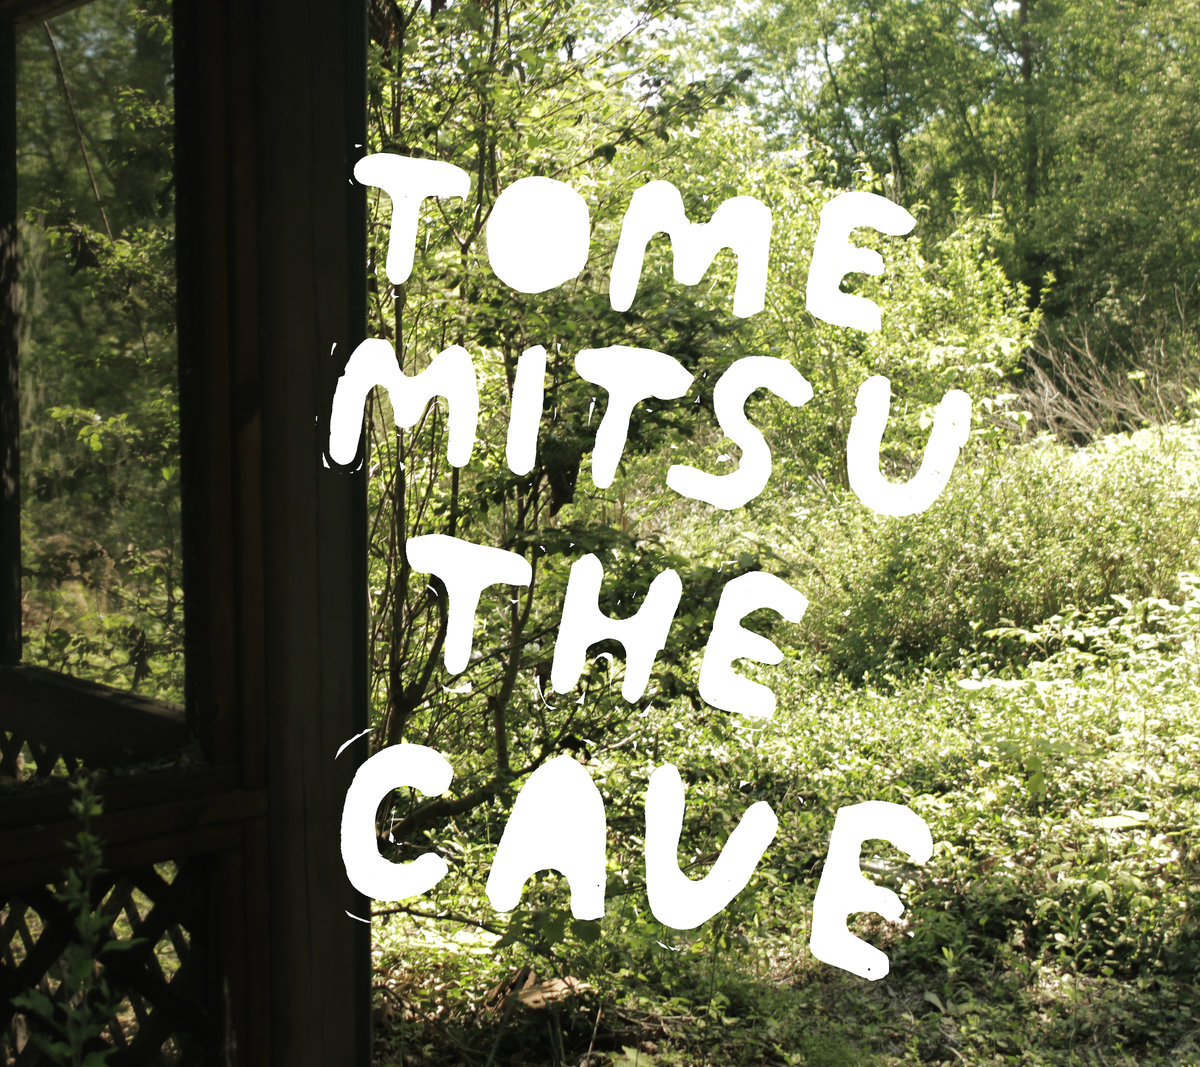 Tomemitsu – The Cave